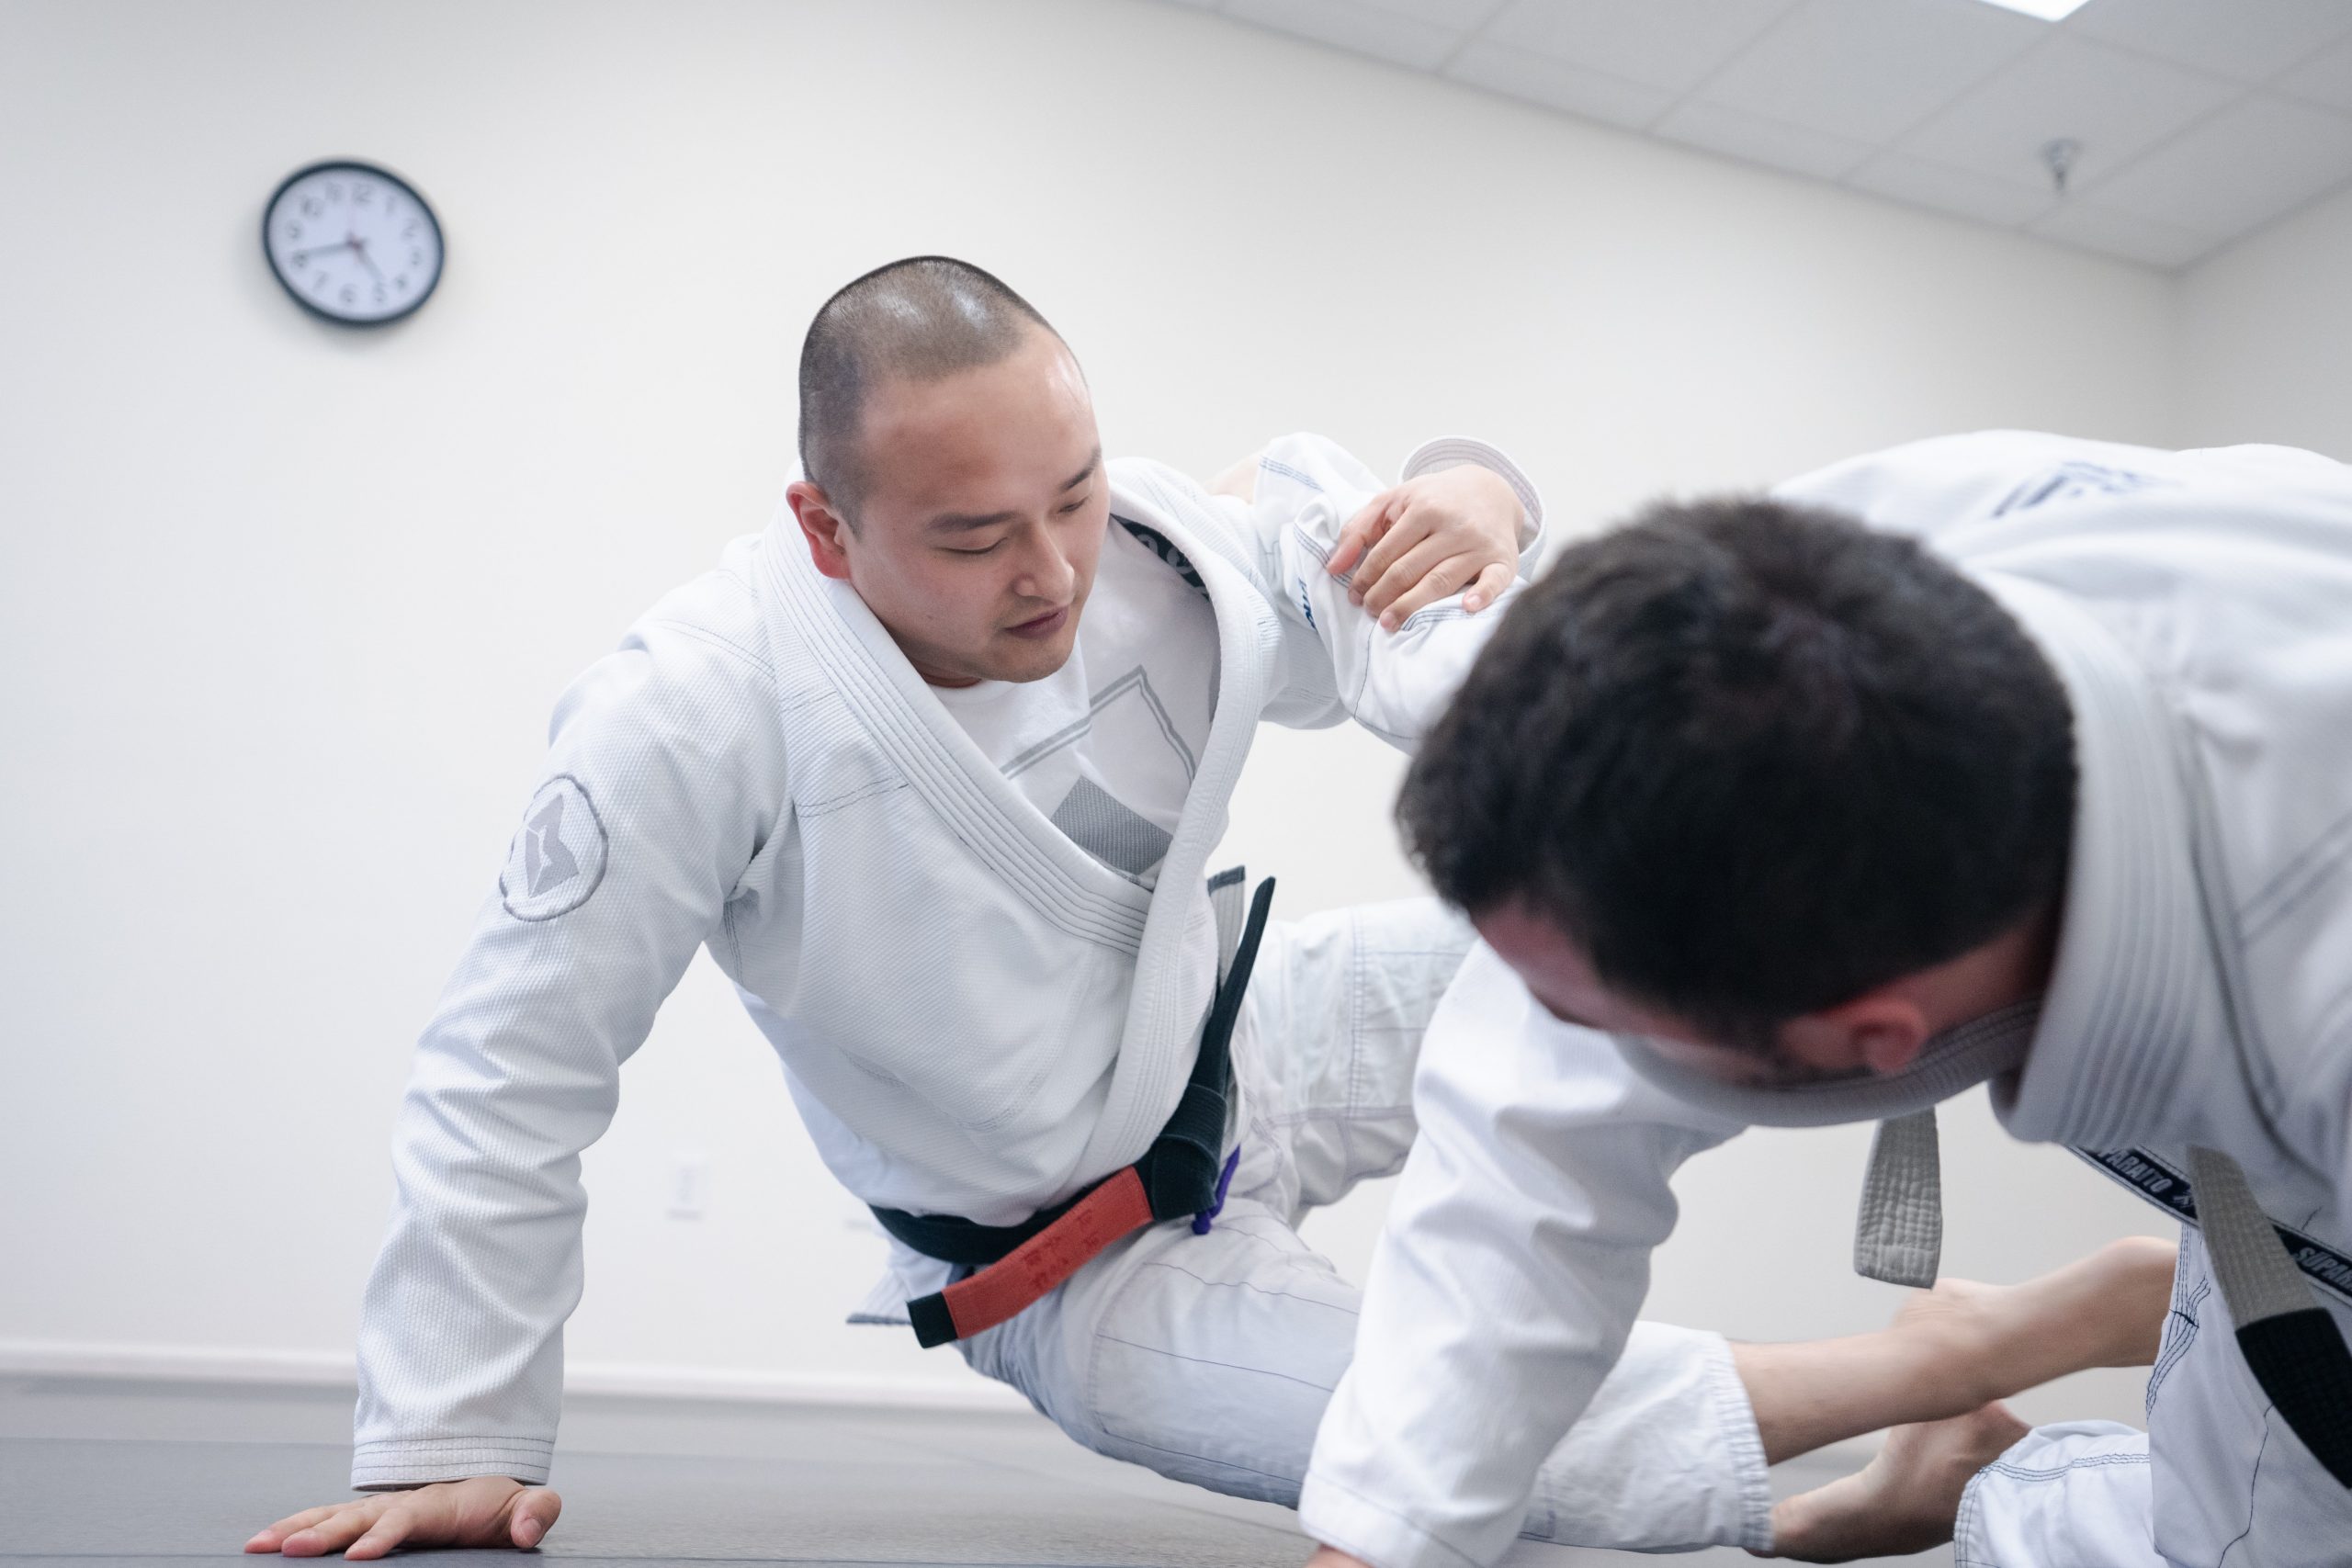 Técnicas esenciales de Jiu Jitsu brasileño